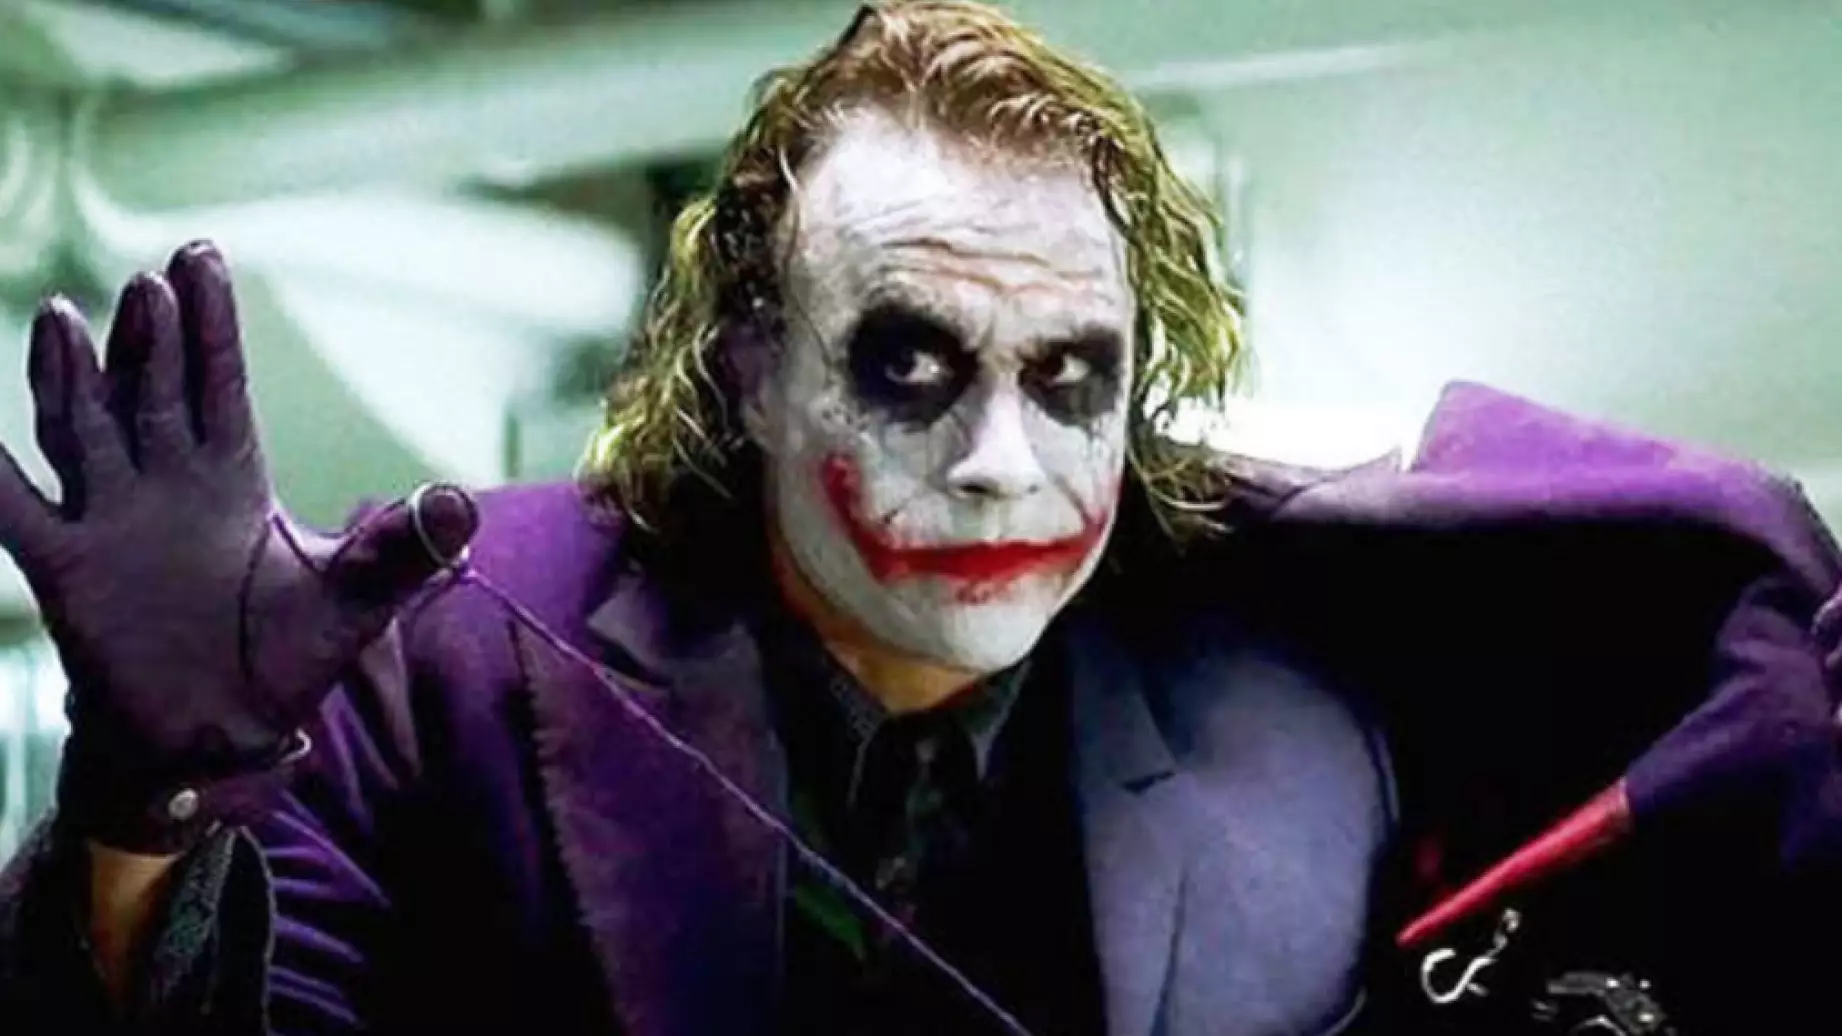 Heath Ledger as The Joker in The Dark Knight.